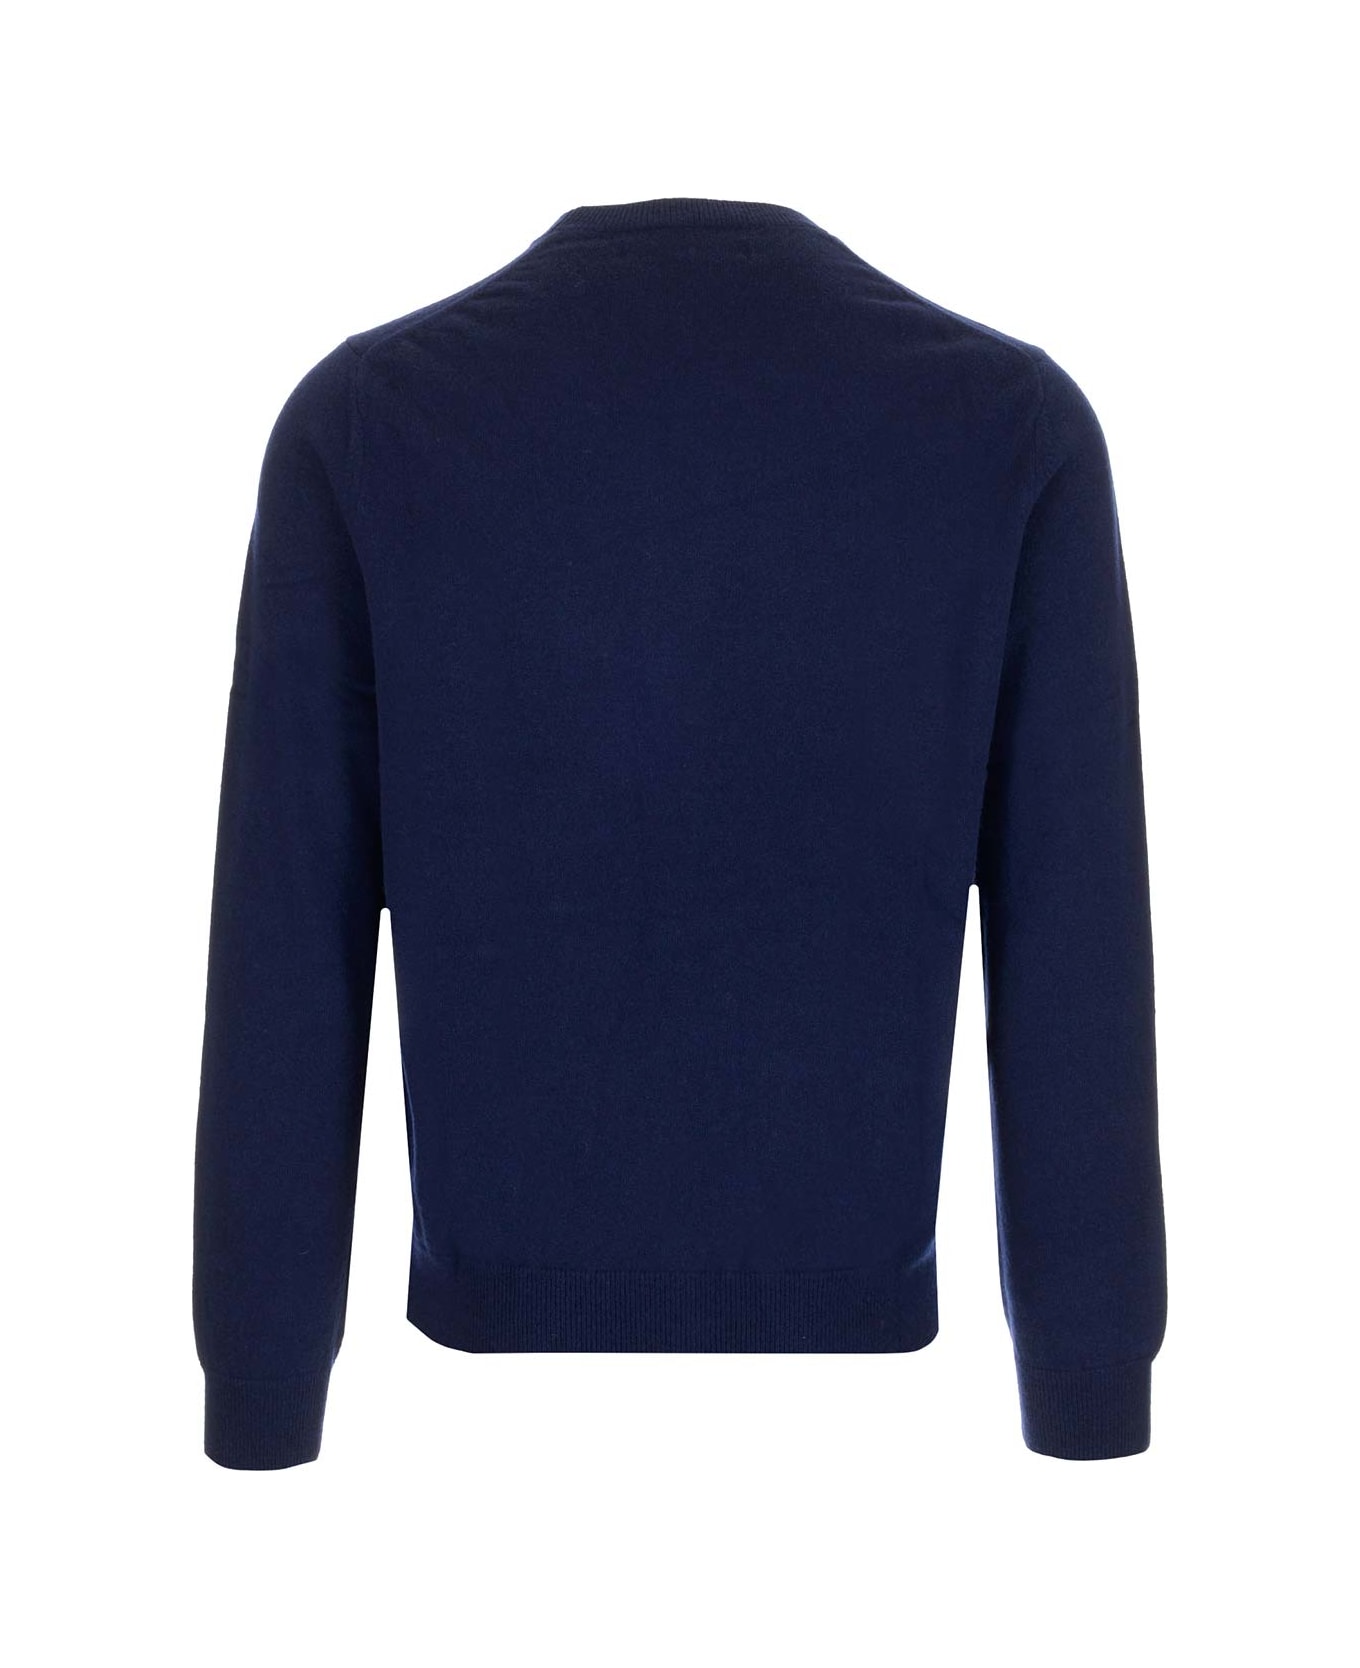 Comme des Garçons Shirt Blue Crewneck Sweater - NAVY